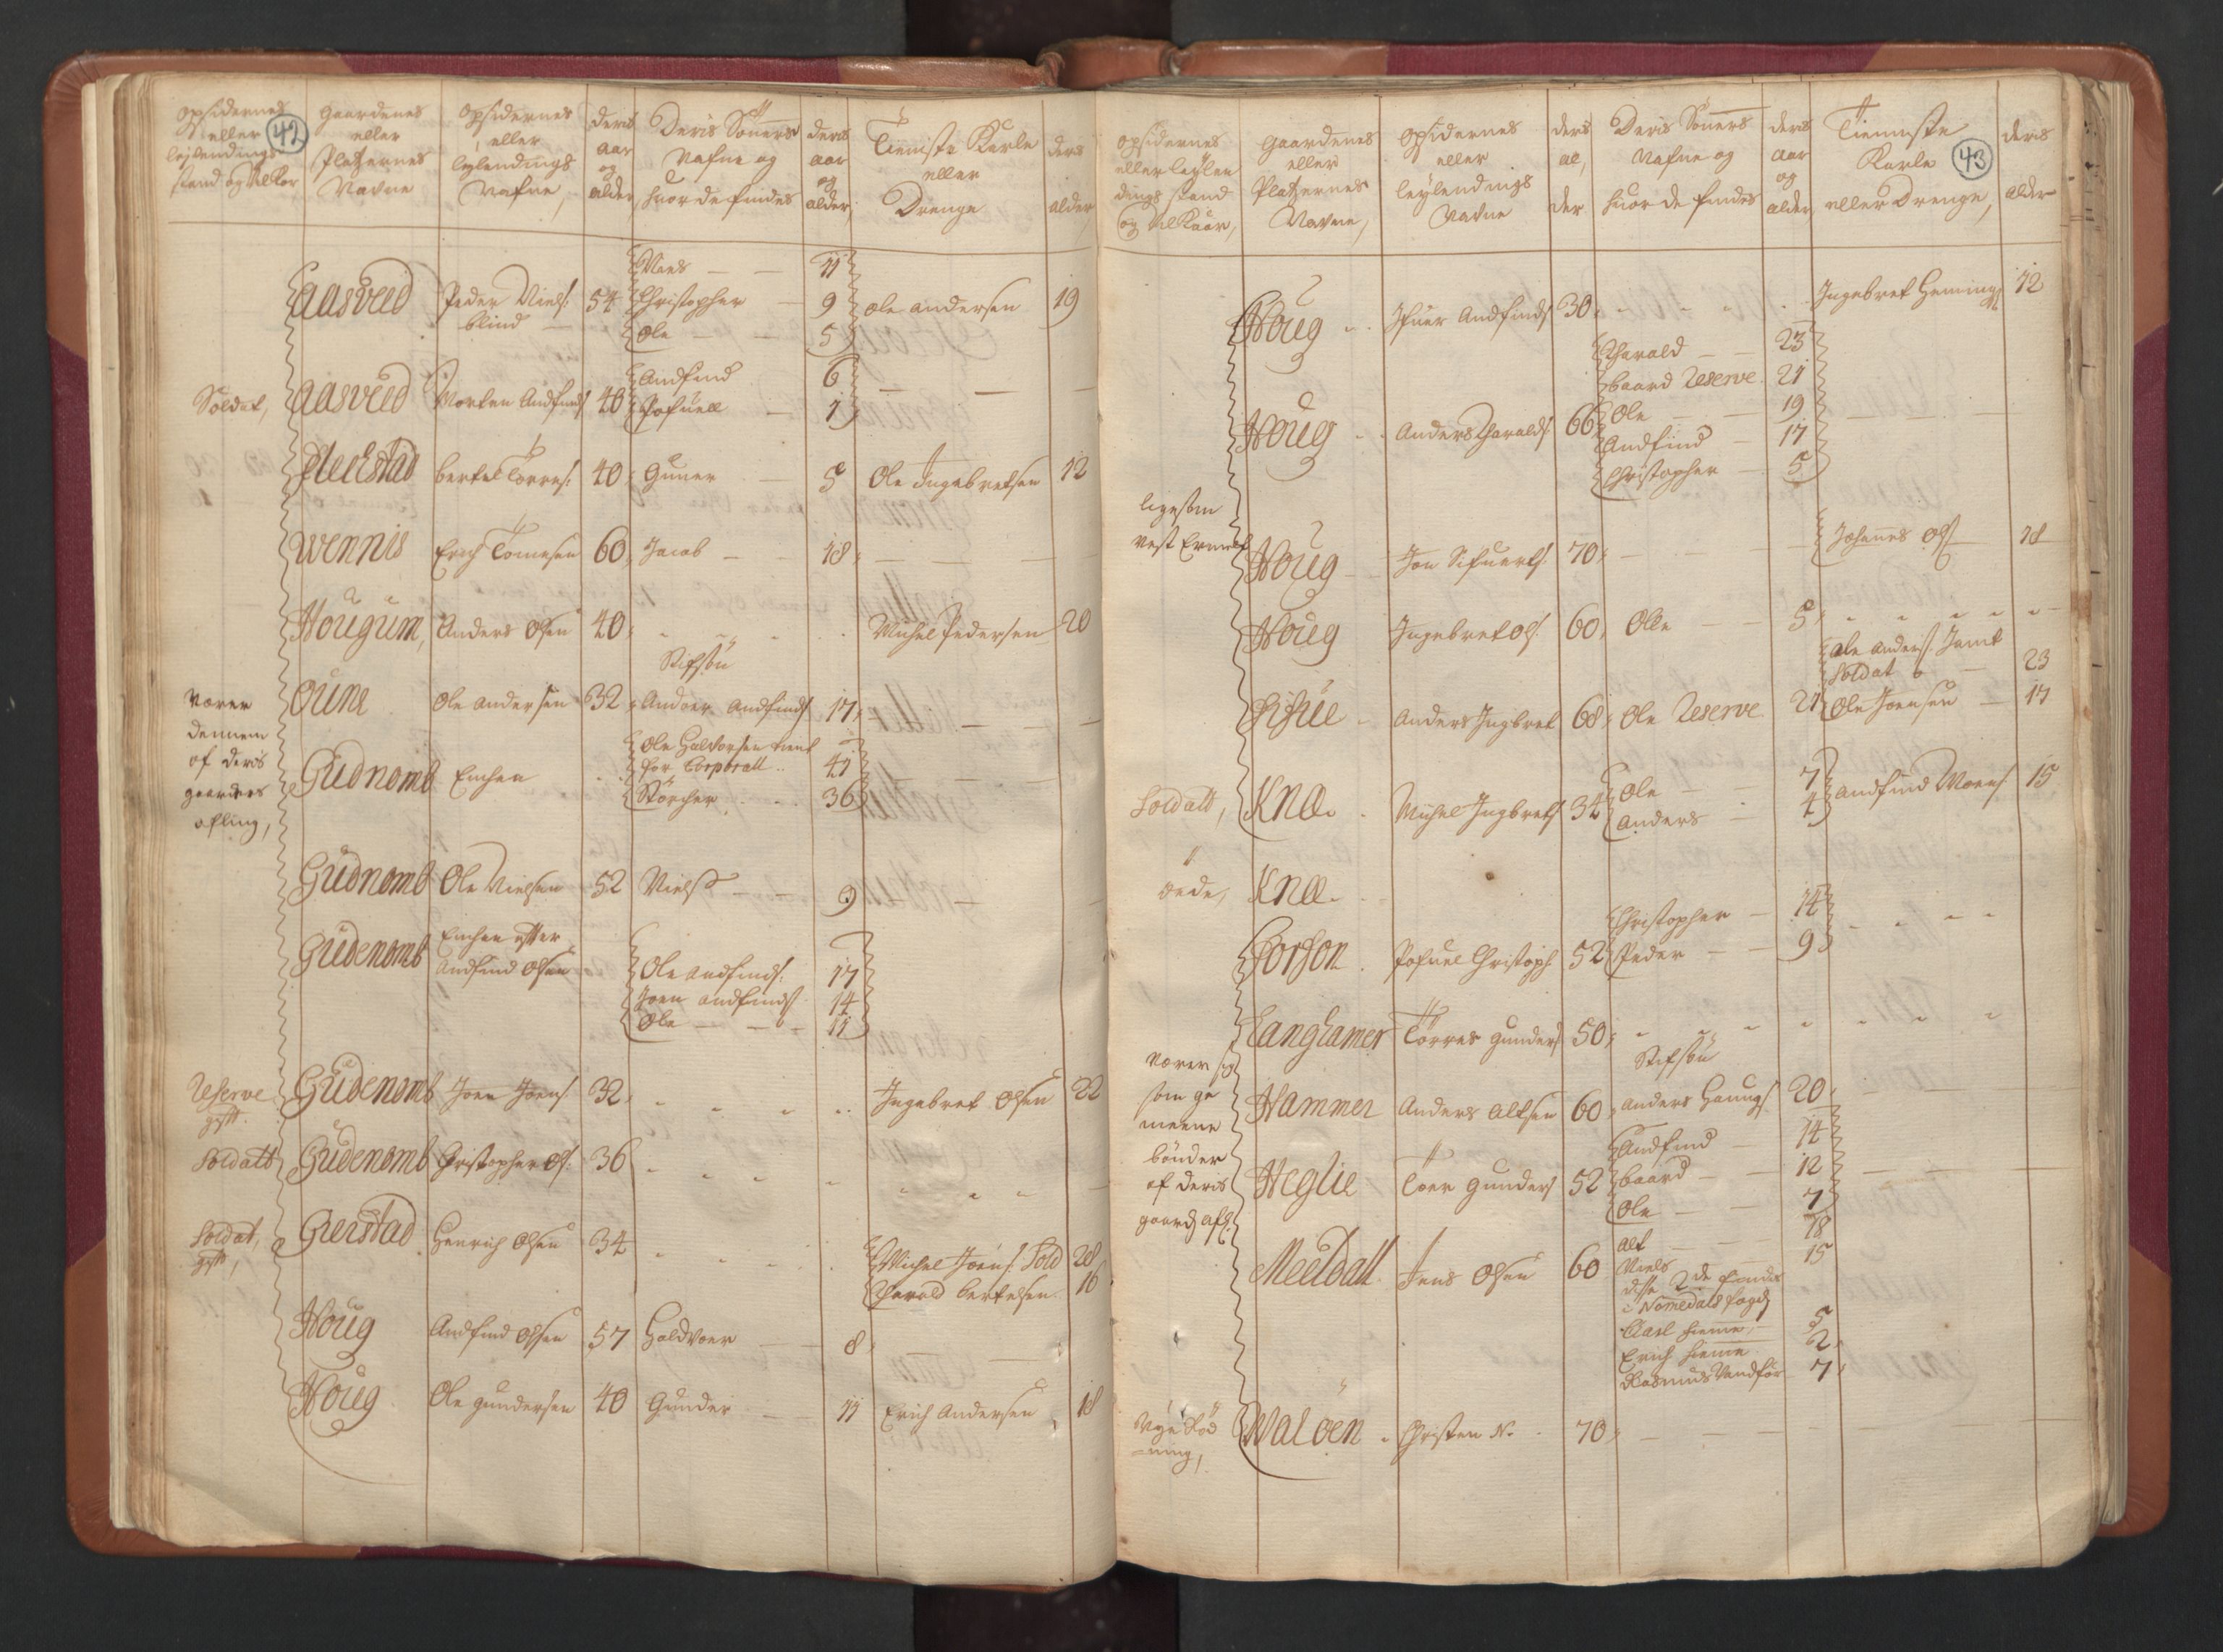 RA, Census (manntall) 1701, no. 15: Inderøy fogderi and Namdal fogderi, 1701, p. 42-43